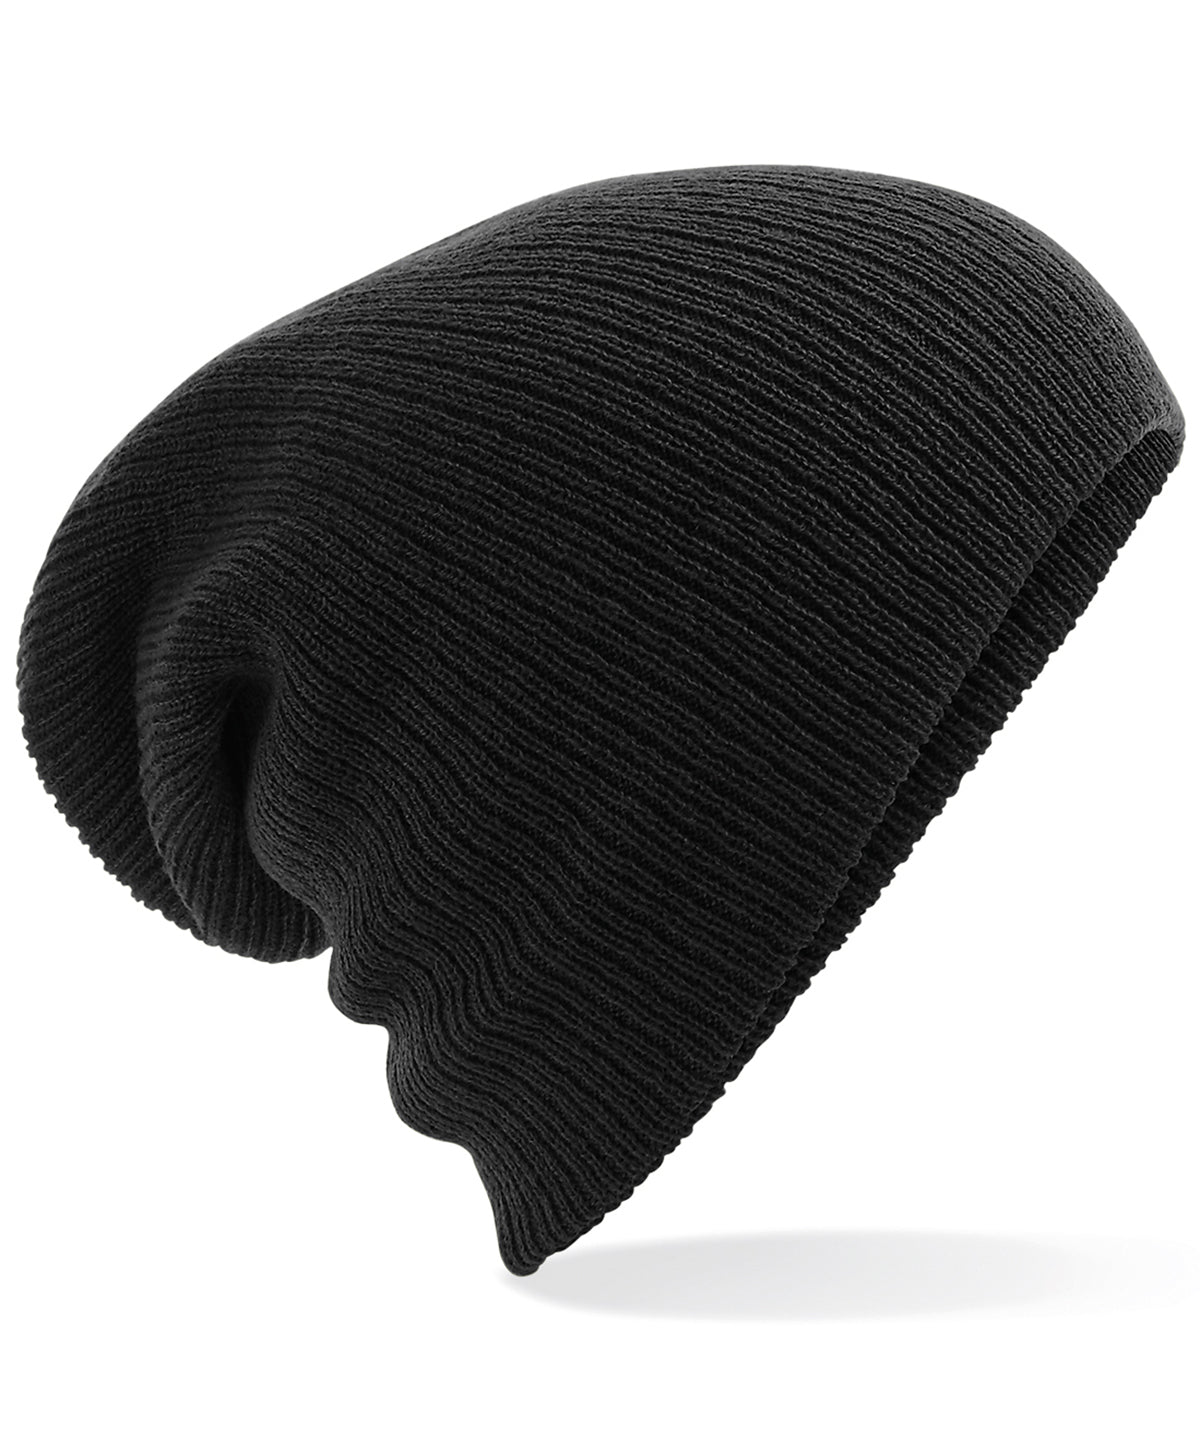 Personalised Hats - Black Beechfield Heavy gauge slouch beanie